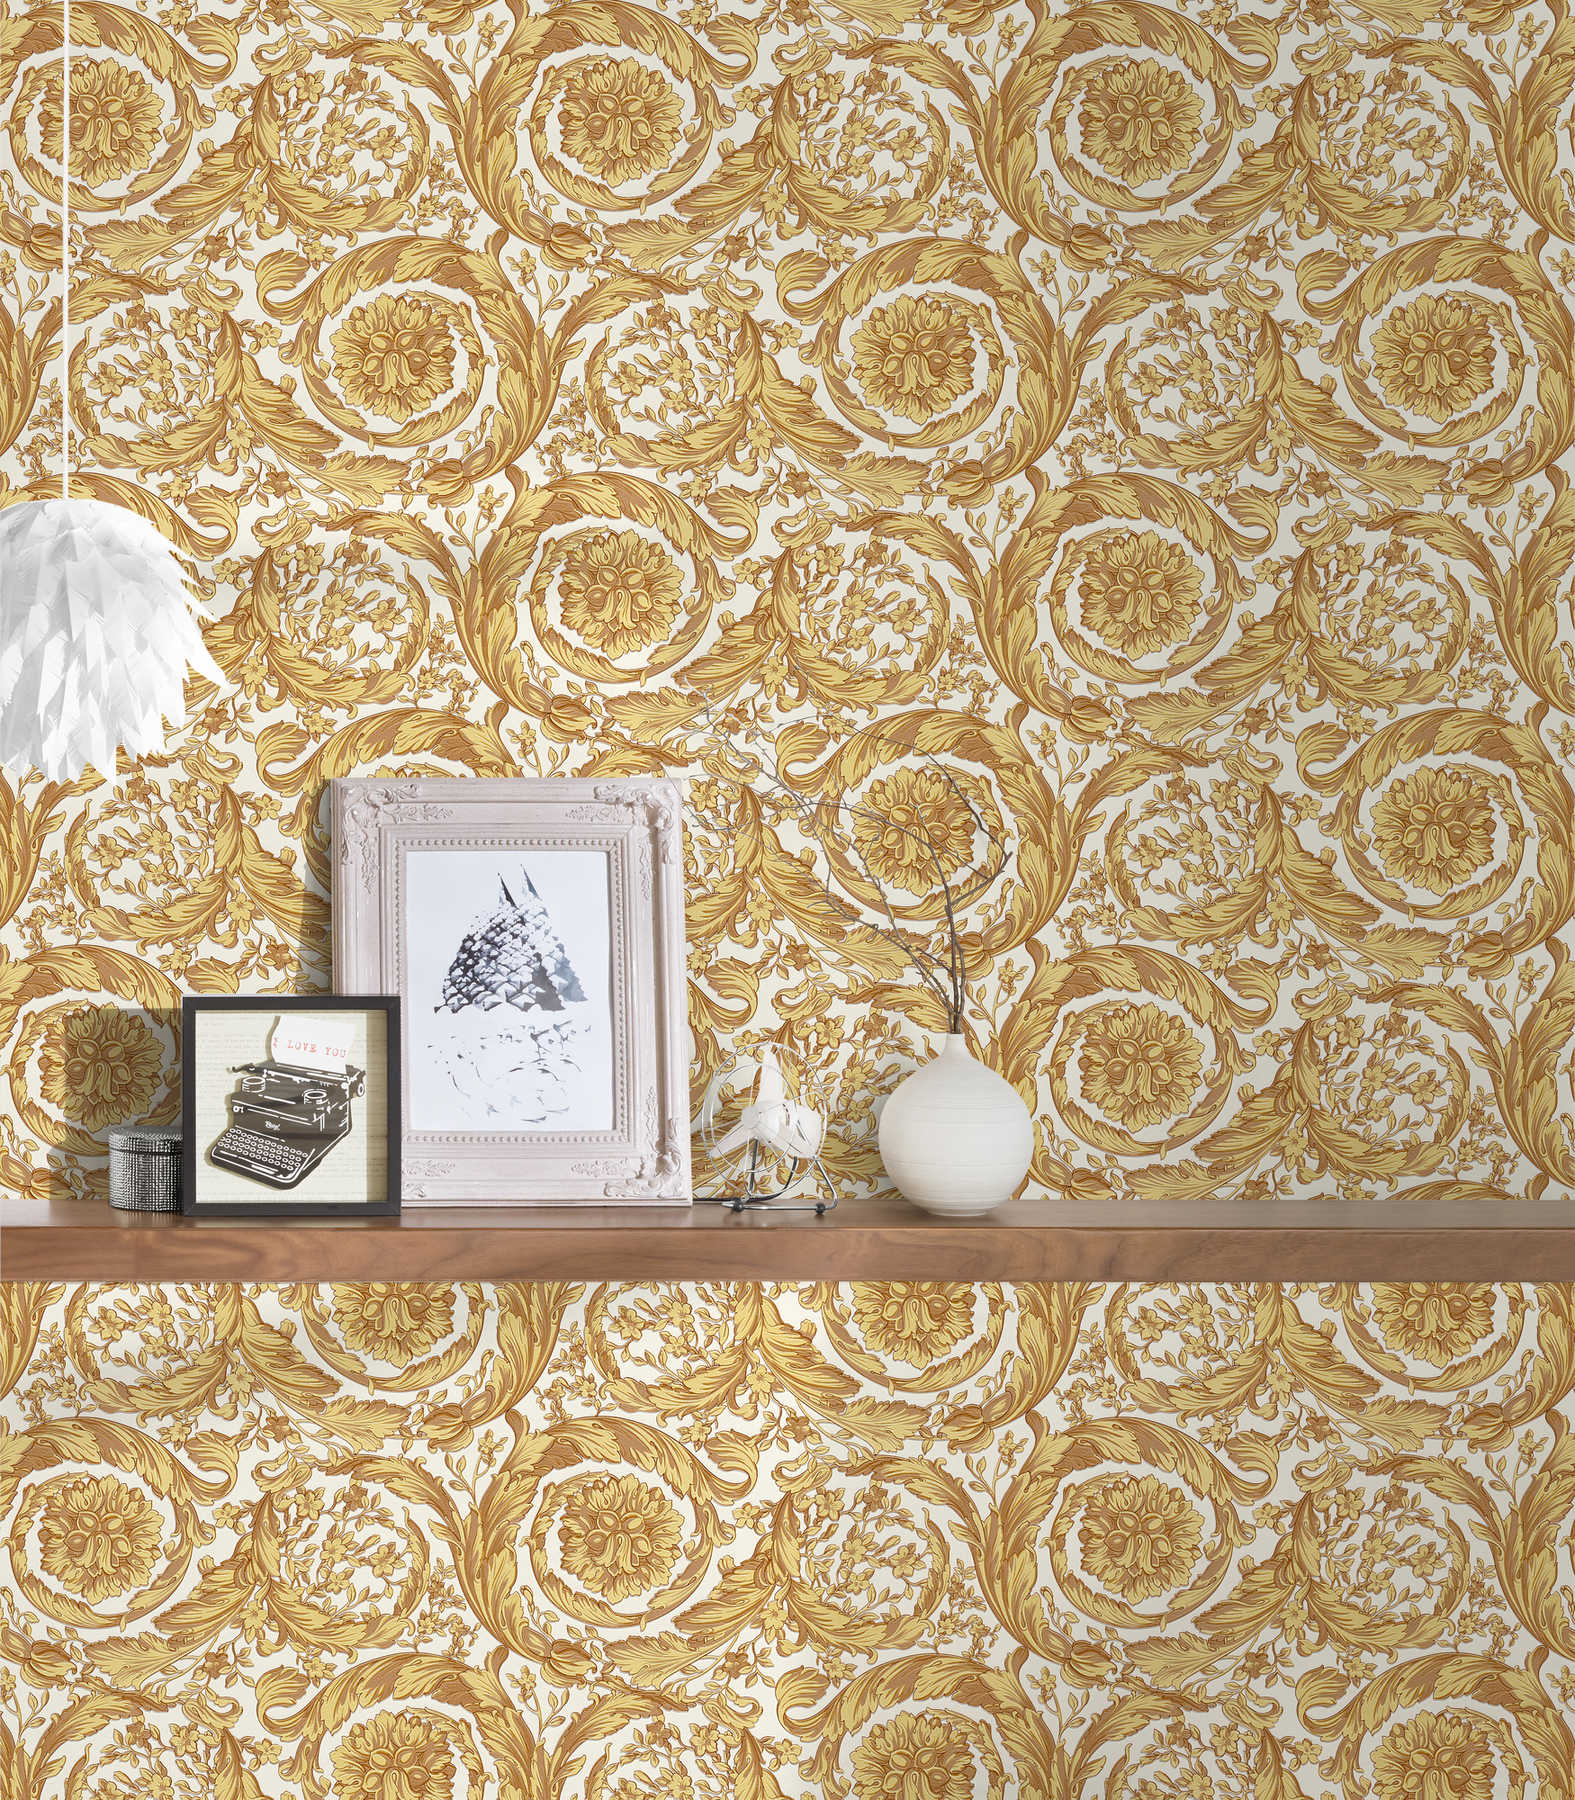             VERSACE Tapete ornamentales Blumenmuster – Gold, Gelb, Beige
        